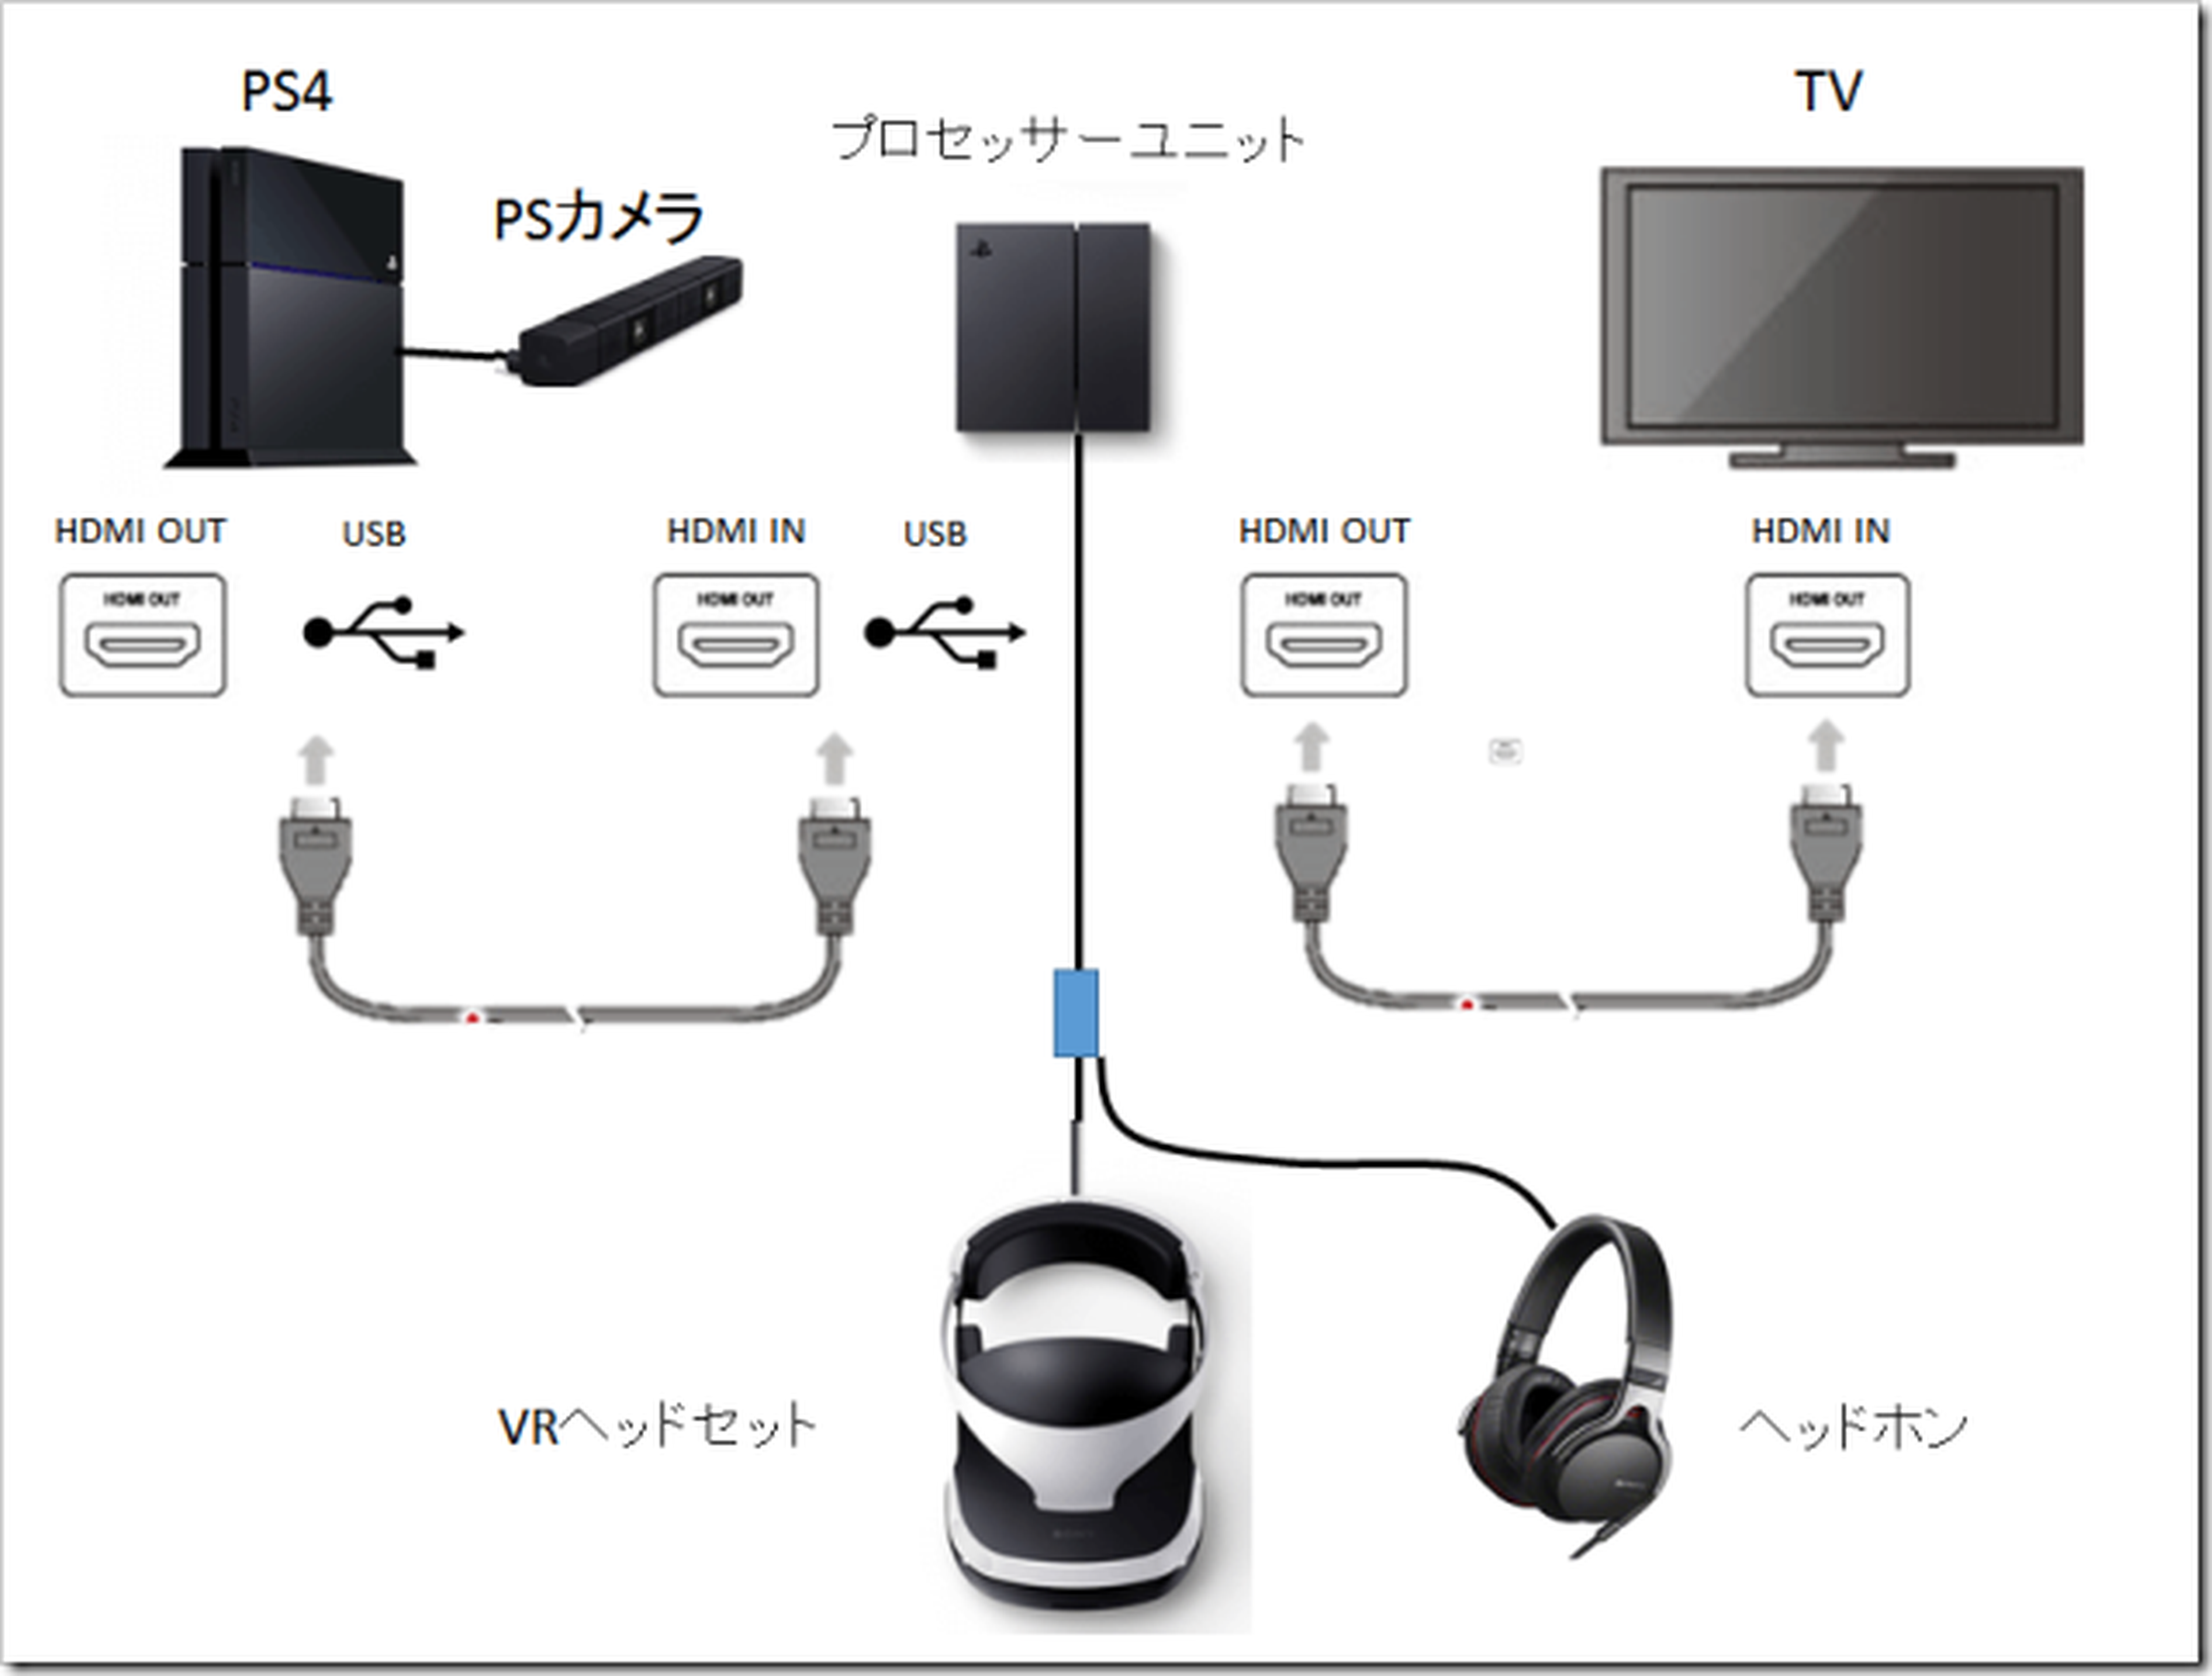 Gafas de realidad virtual  Sony PlayStation VR, Cámara V2 + PS4 VR Worlds  (Descarga), Para PS4